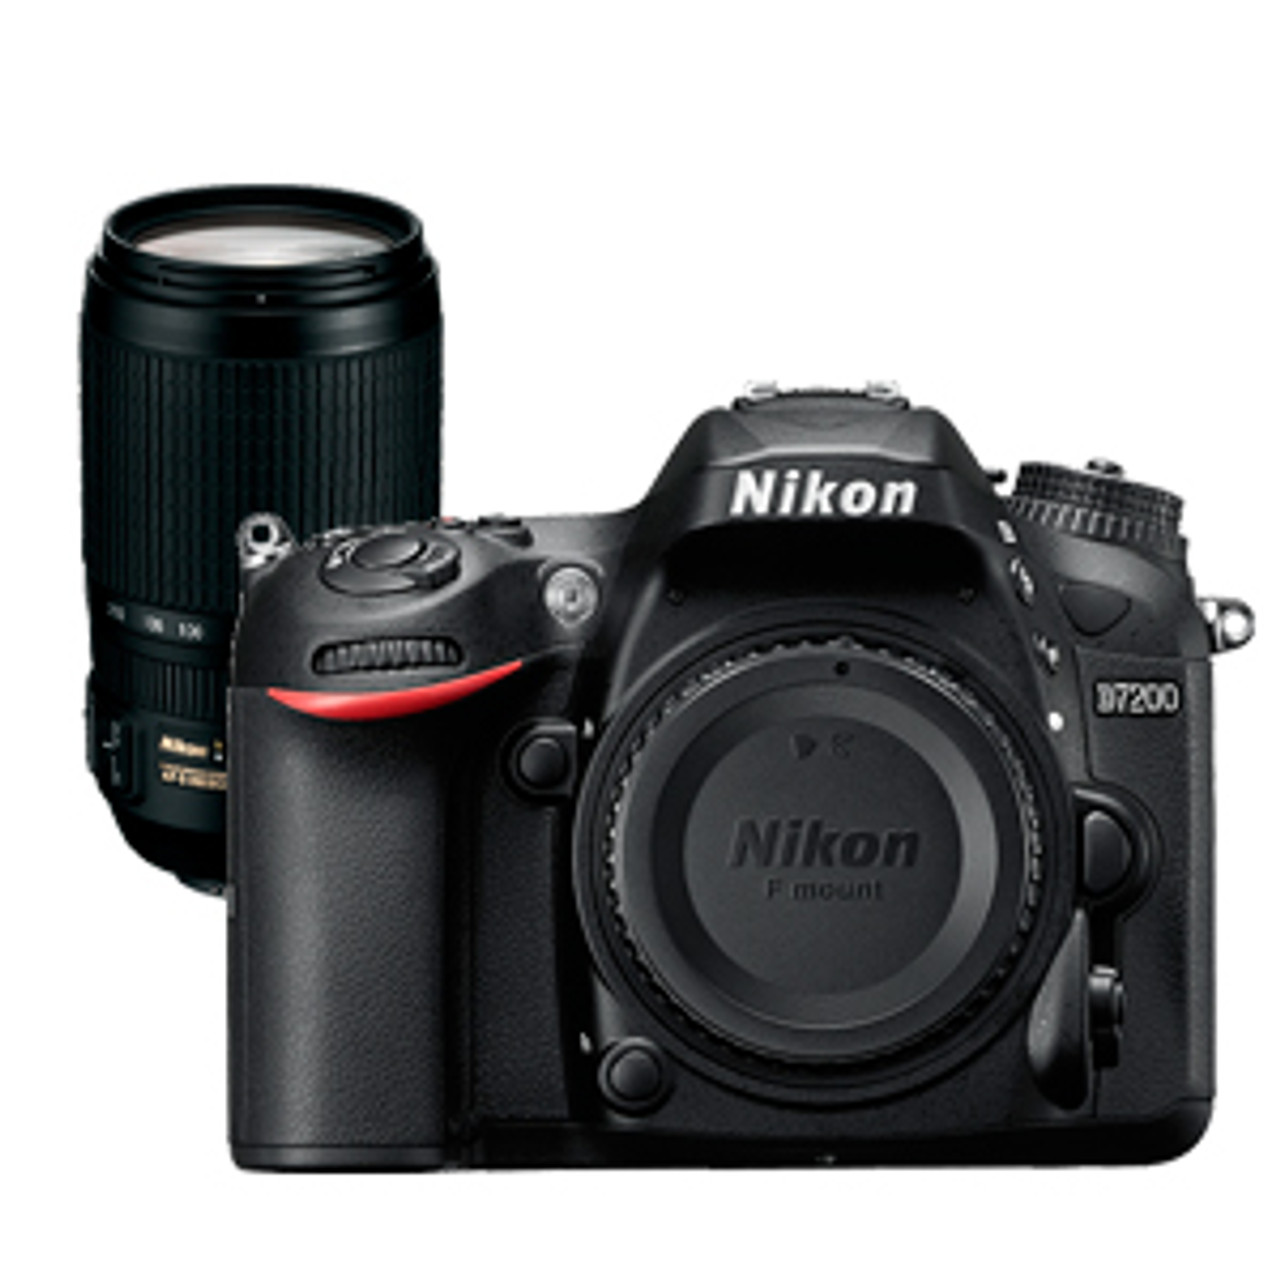 Nikon D7200 Body with 70-300mm VR Lens Kit